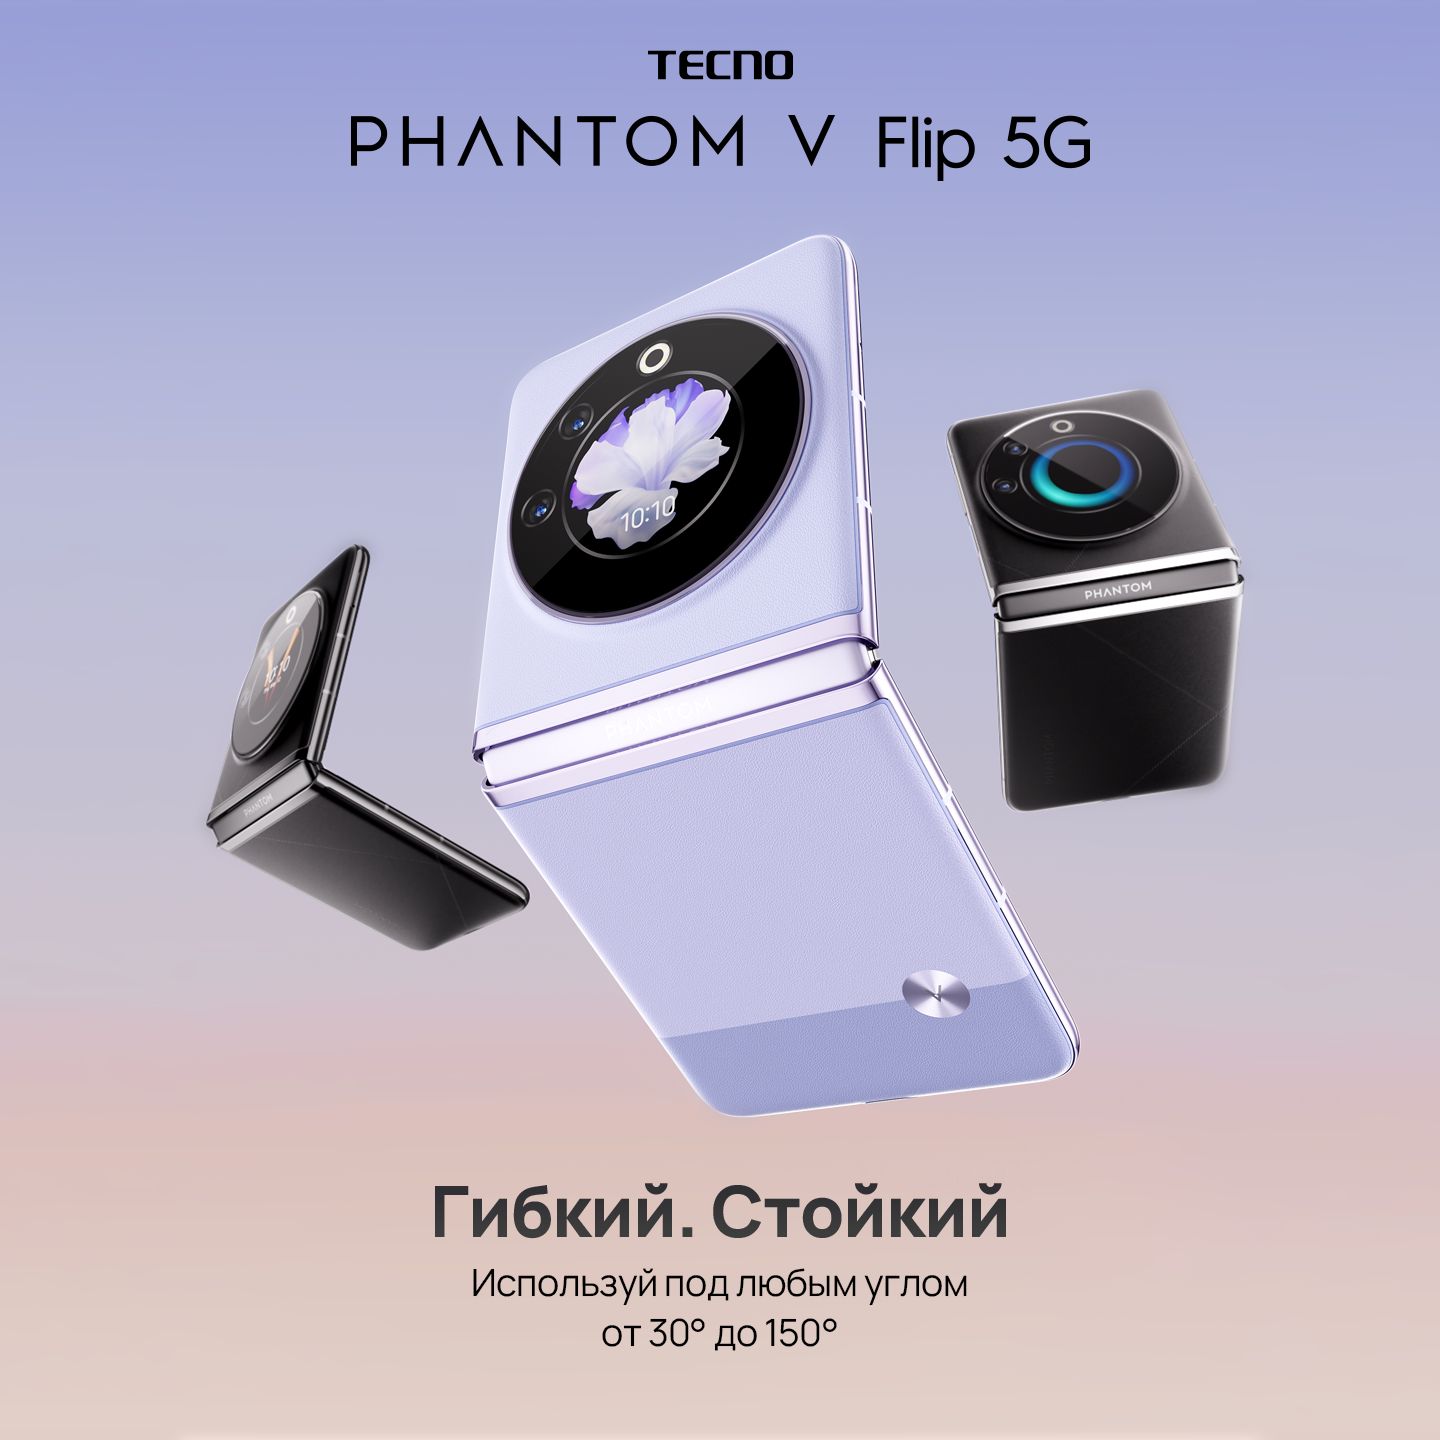 Tecno phantom v flip 8. Смартфон Phantom v Flip 5g 8/256 GB, Tecno. Techno v Flip 5g. Смартфон Phantom v Flip Tecno картинки на внешний экран. Смартфон Tecno Phantom v Flip 5g 256gb фиолетовый.